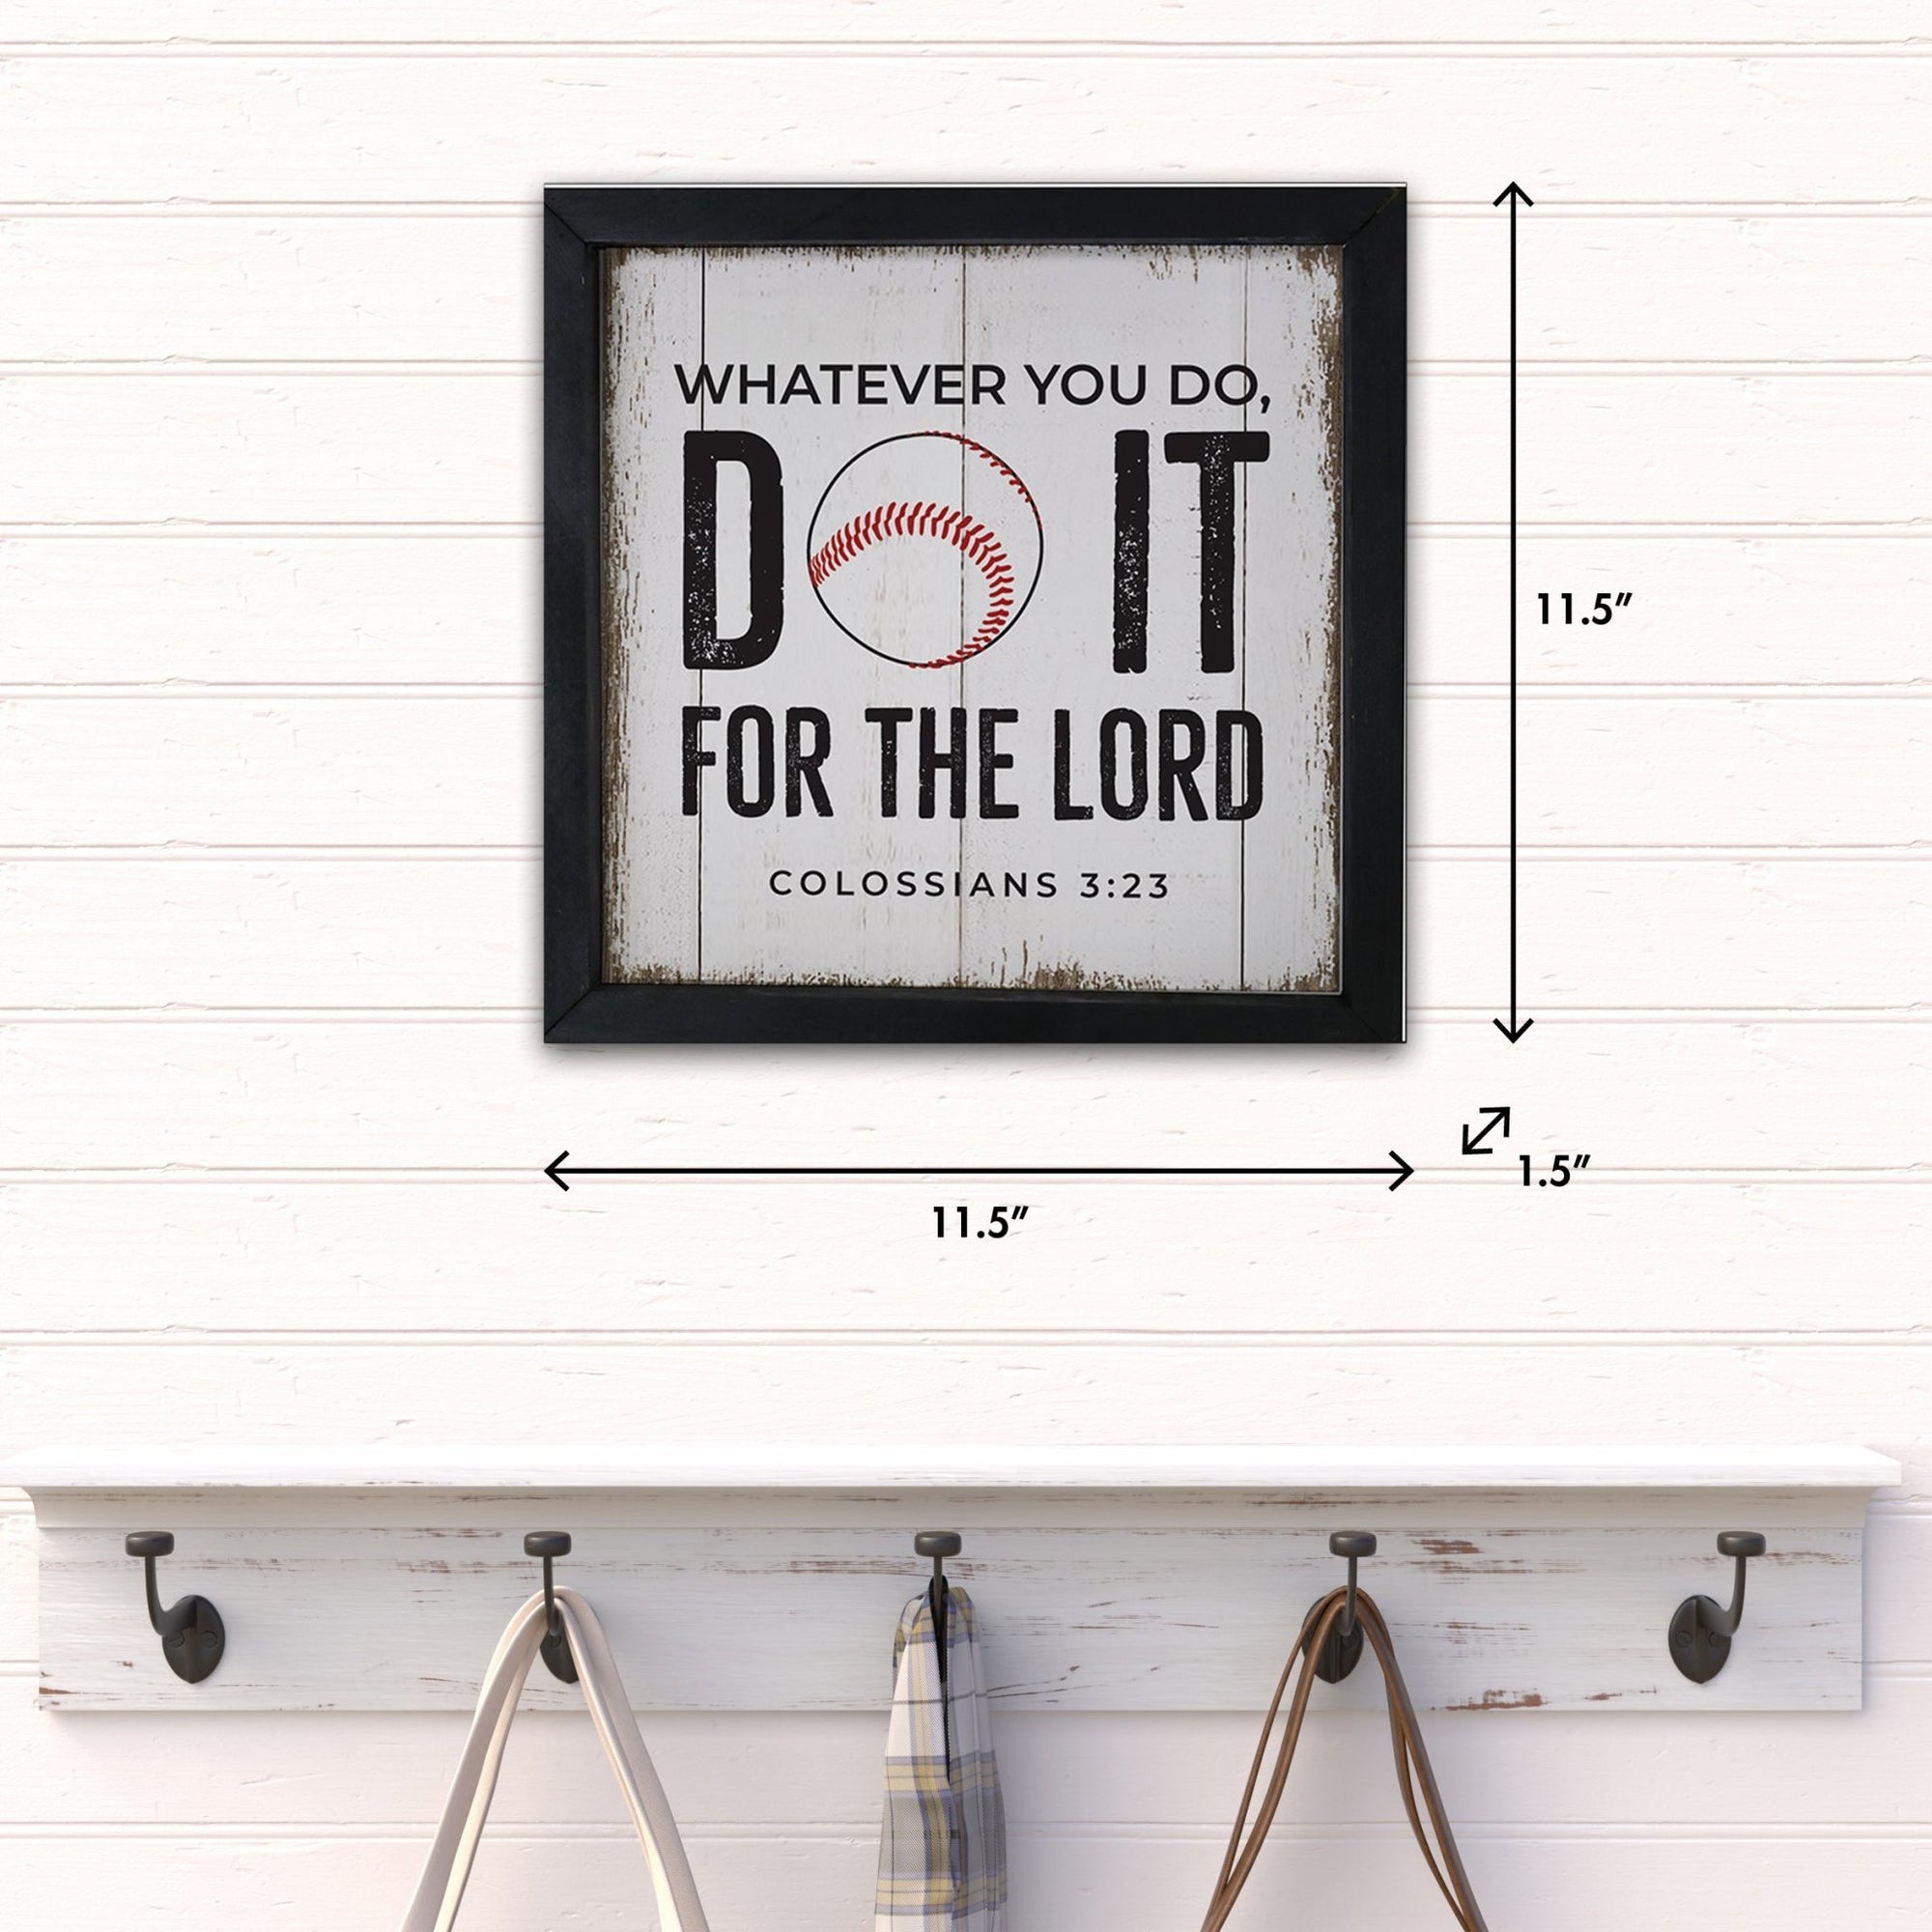 Elegant Baseball Framed Shadow Box Shelf Décor With Inspiring Bible Verses - Do It - LifeSong Milestones